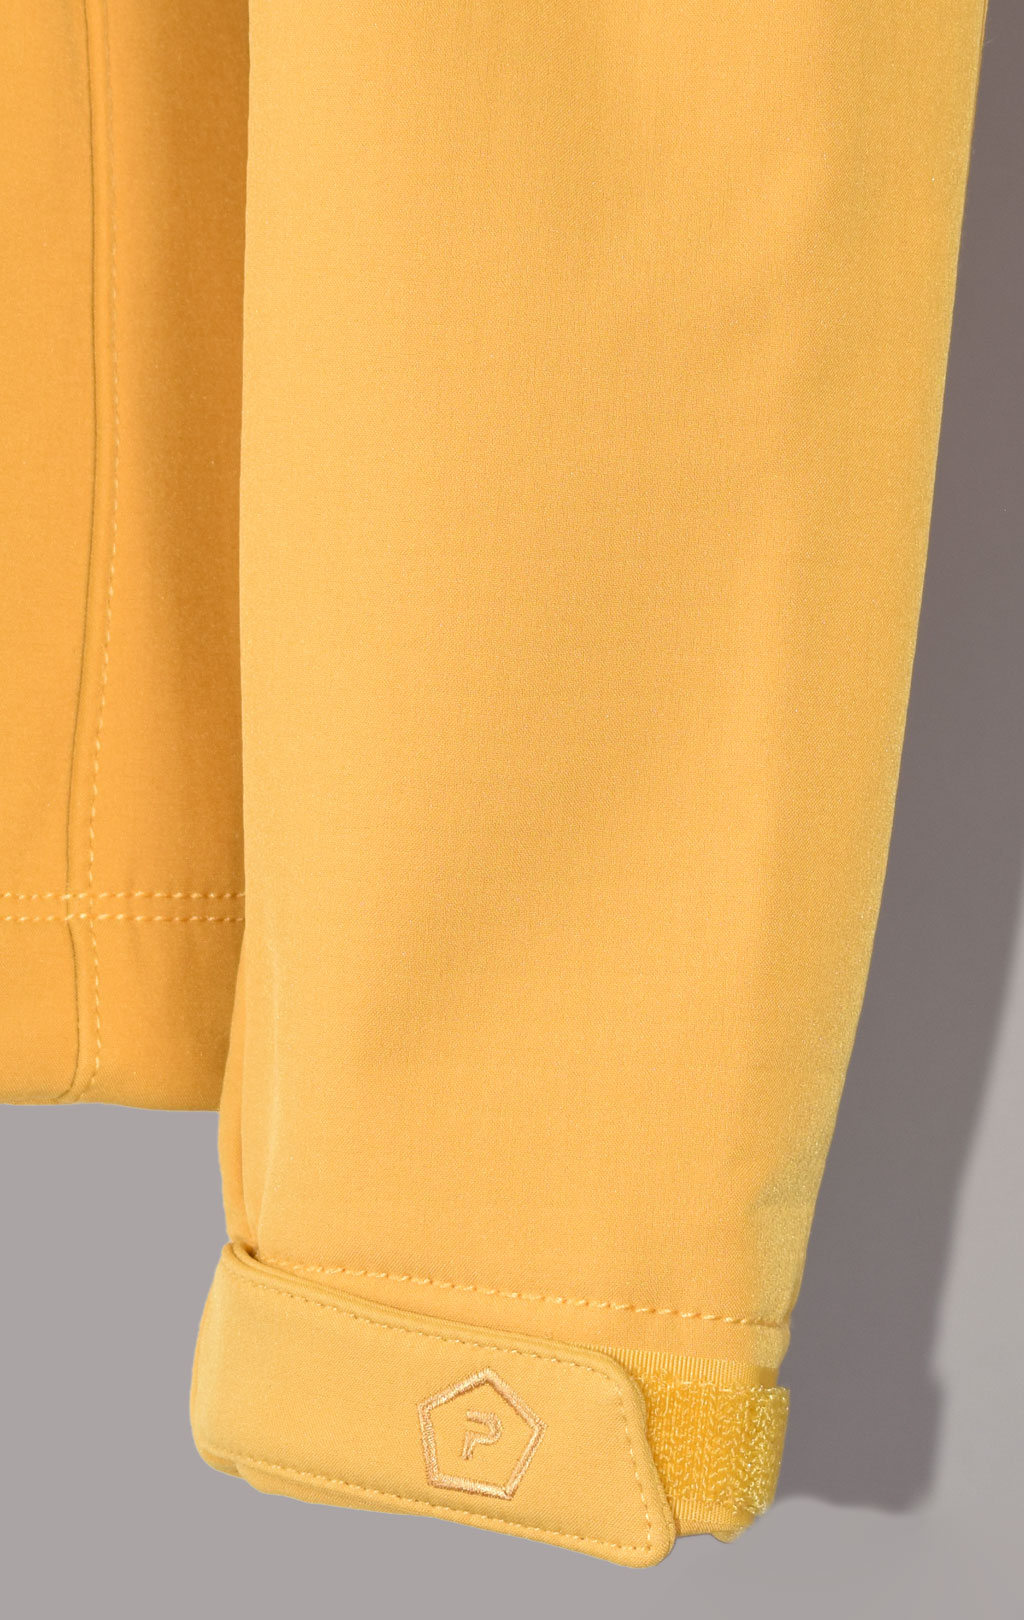 Женская куртка тактическая softshell Pentagon мембрана ARTAXES Soft Shell yellow tuscan-70 08011w 